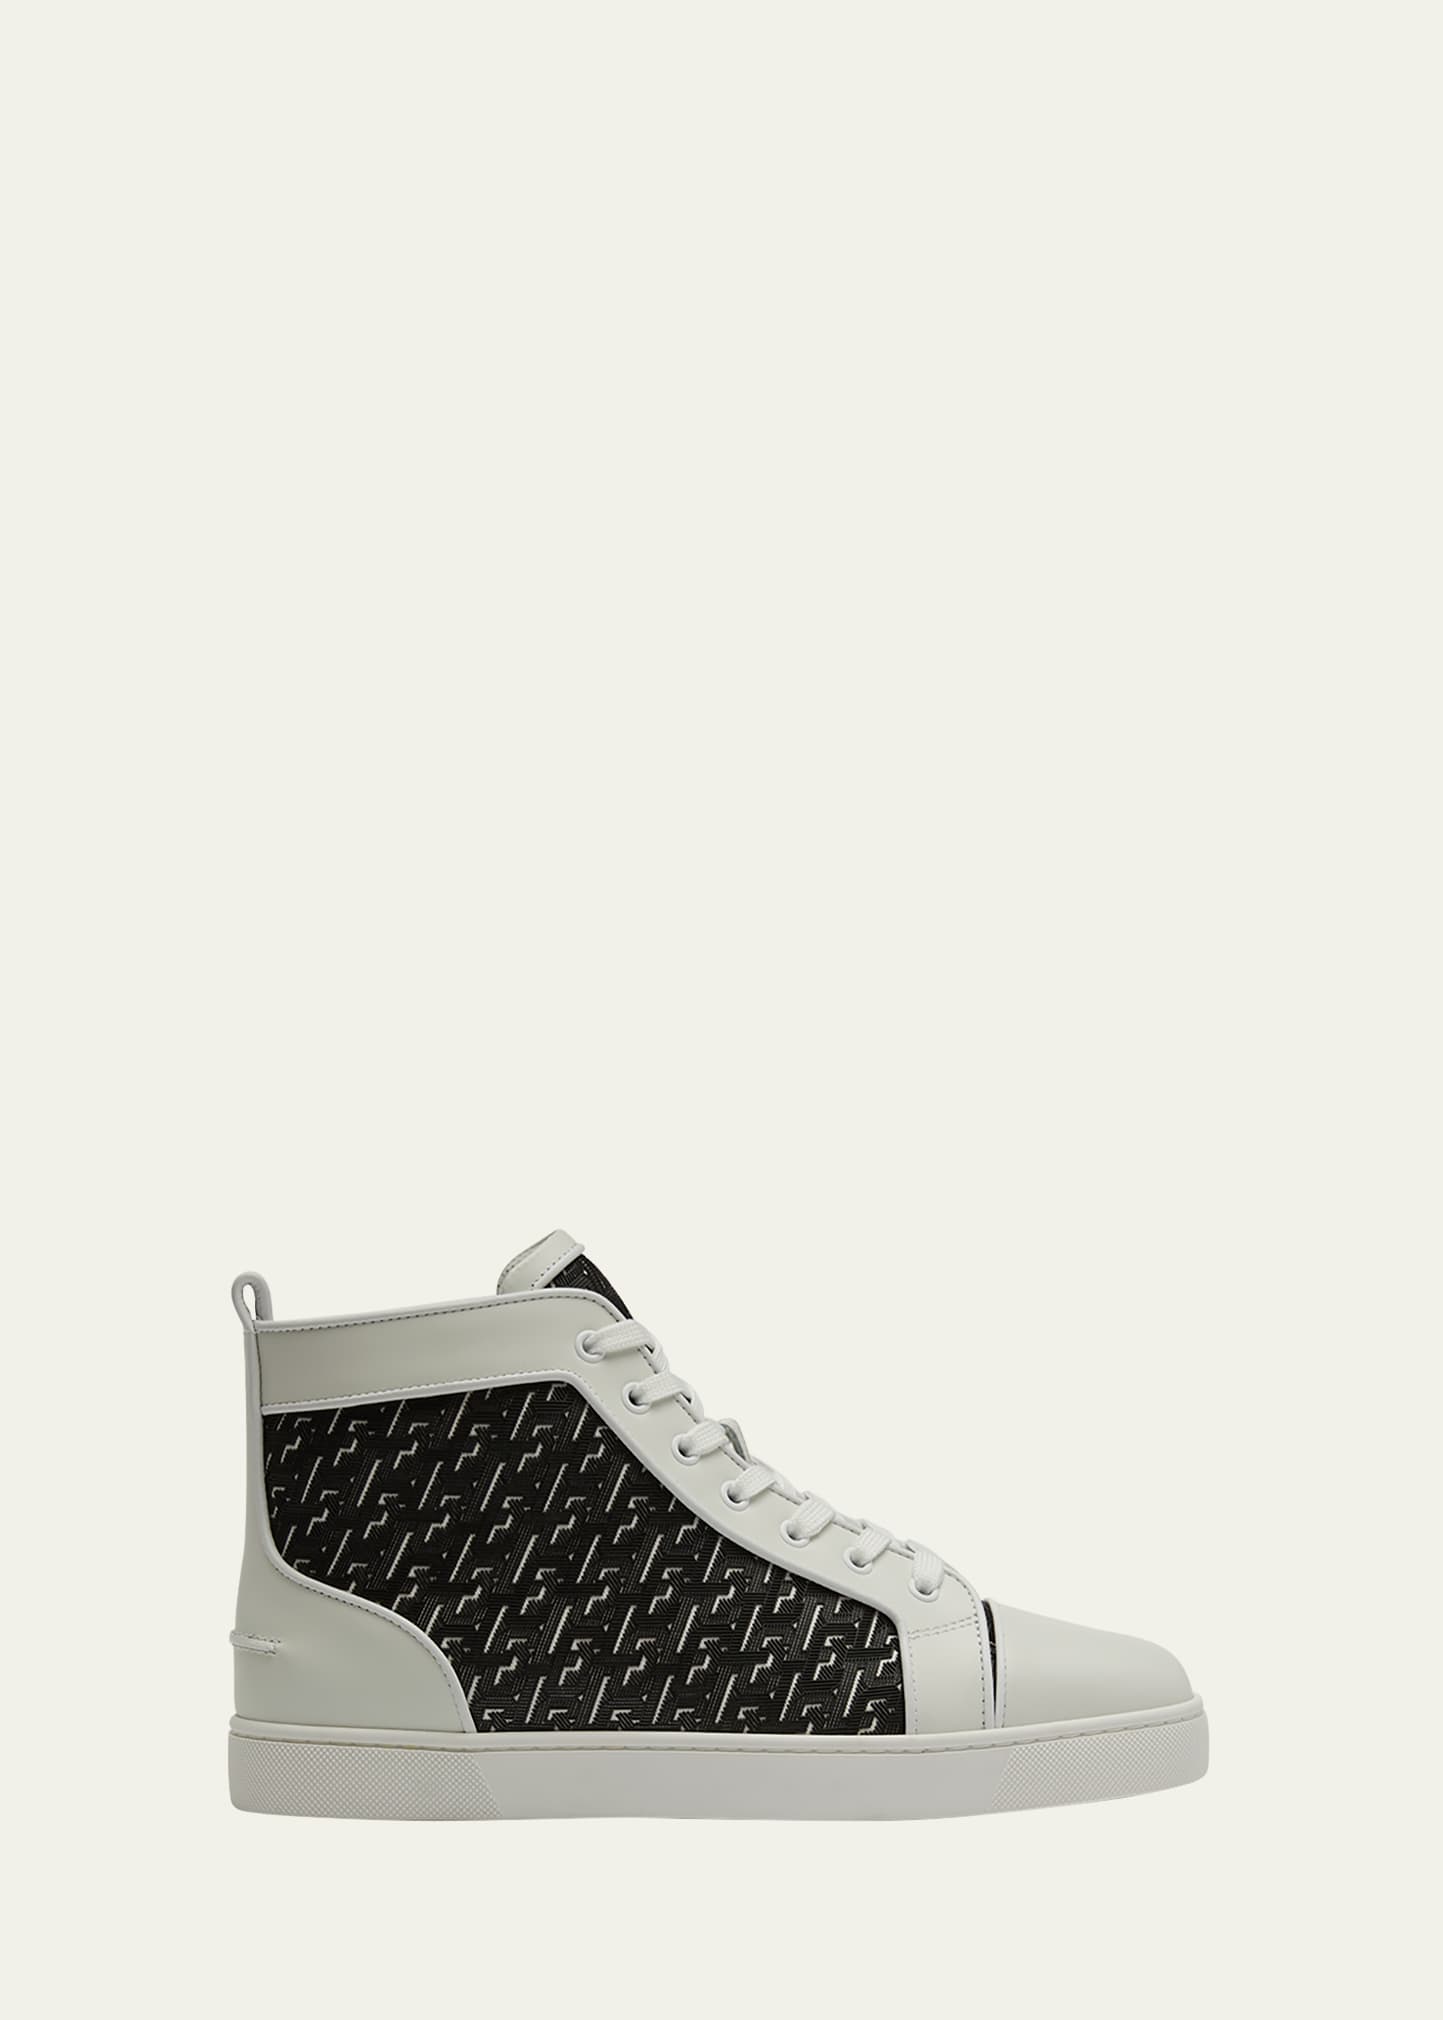 Christian Louboutin Men's Louis Orlato Suede Monogram High-Top Sneakers, Black/White, Men's, 13D, Sneakers & Trainers High Top Sneakers